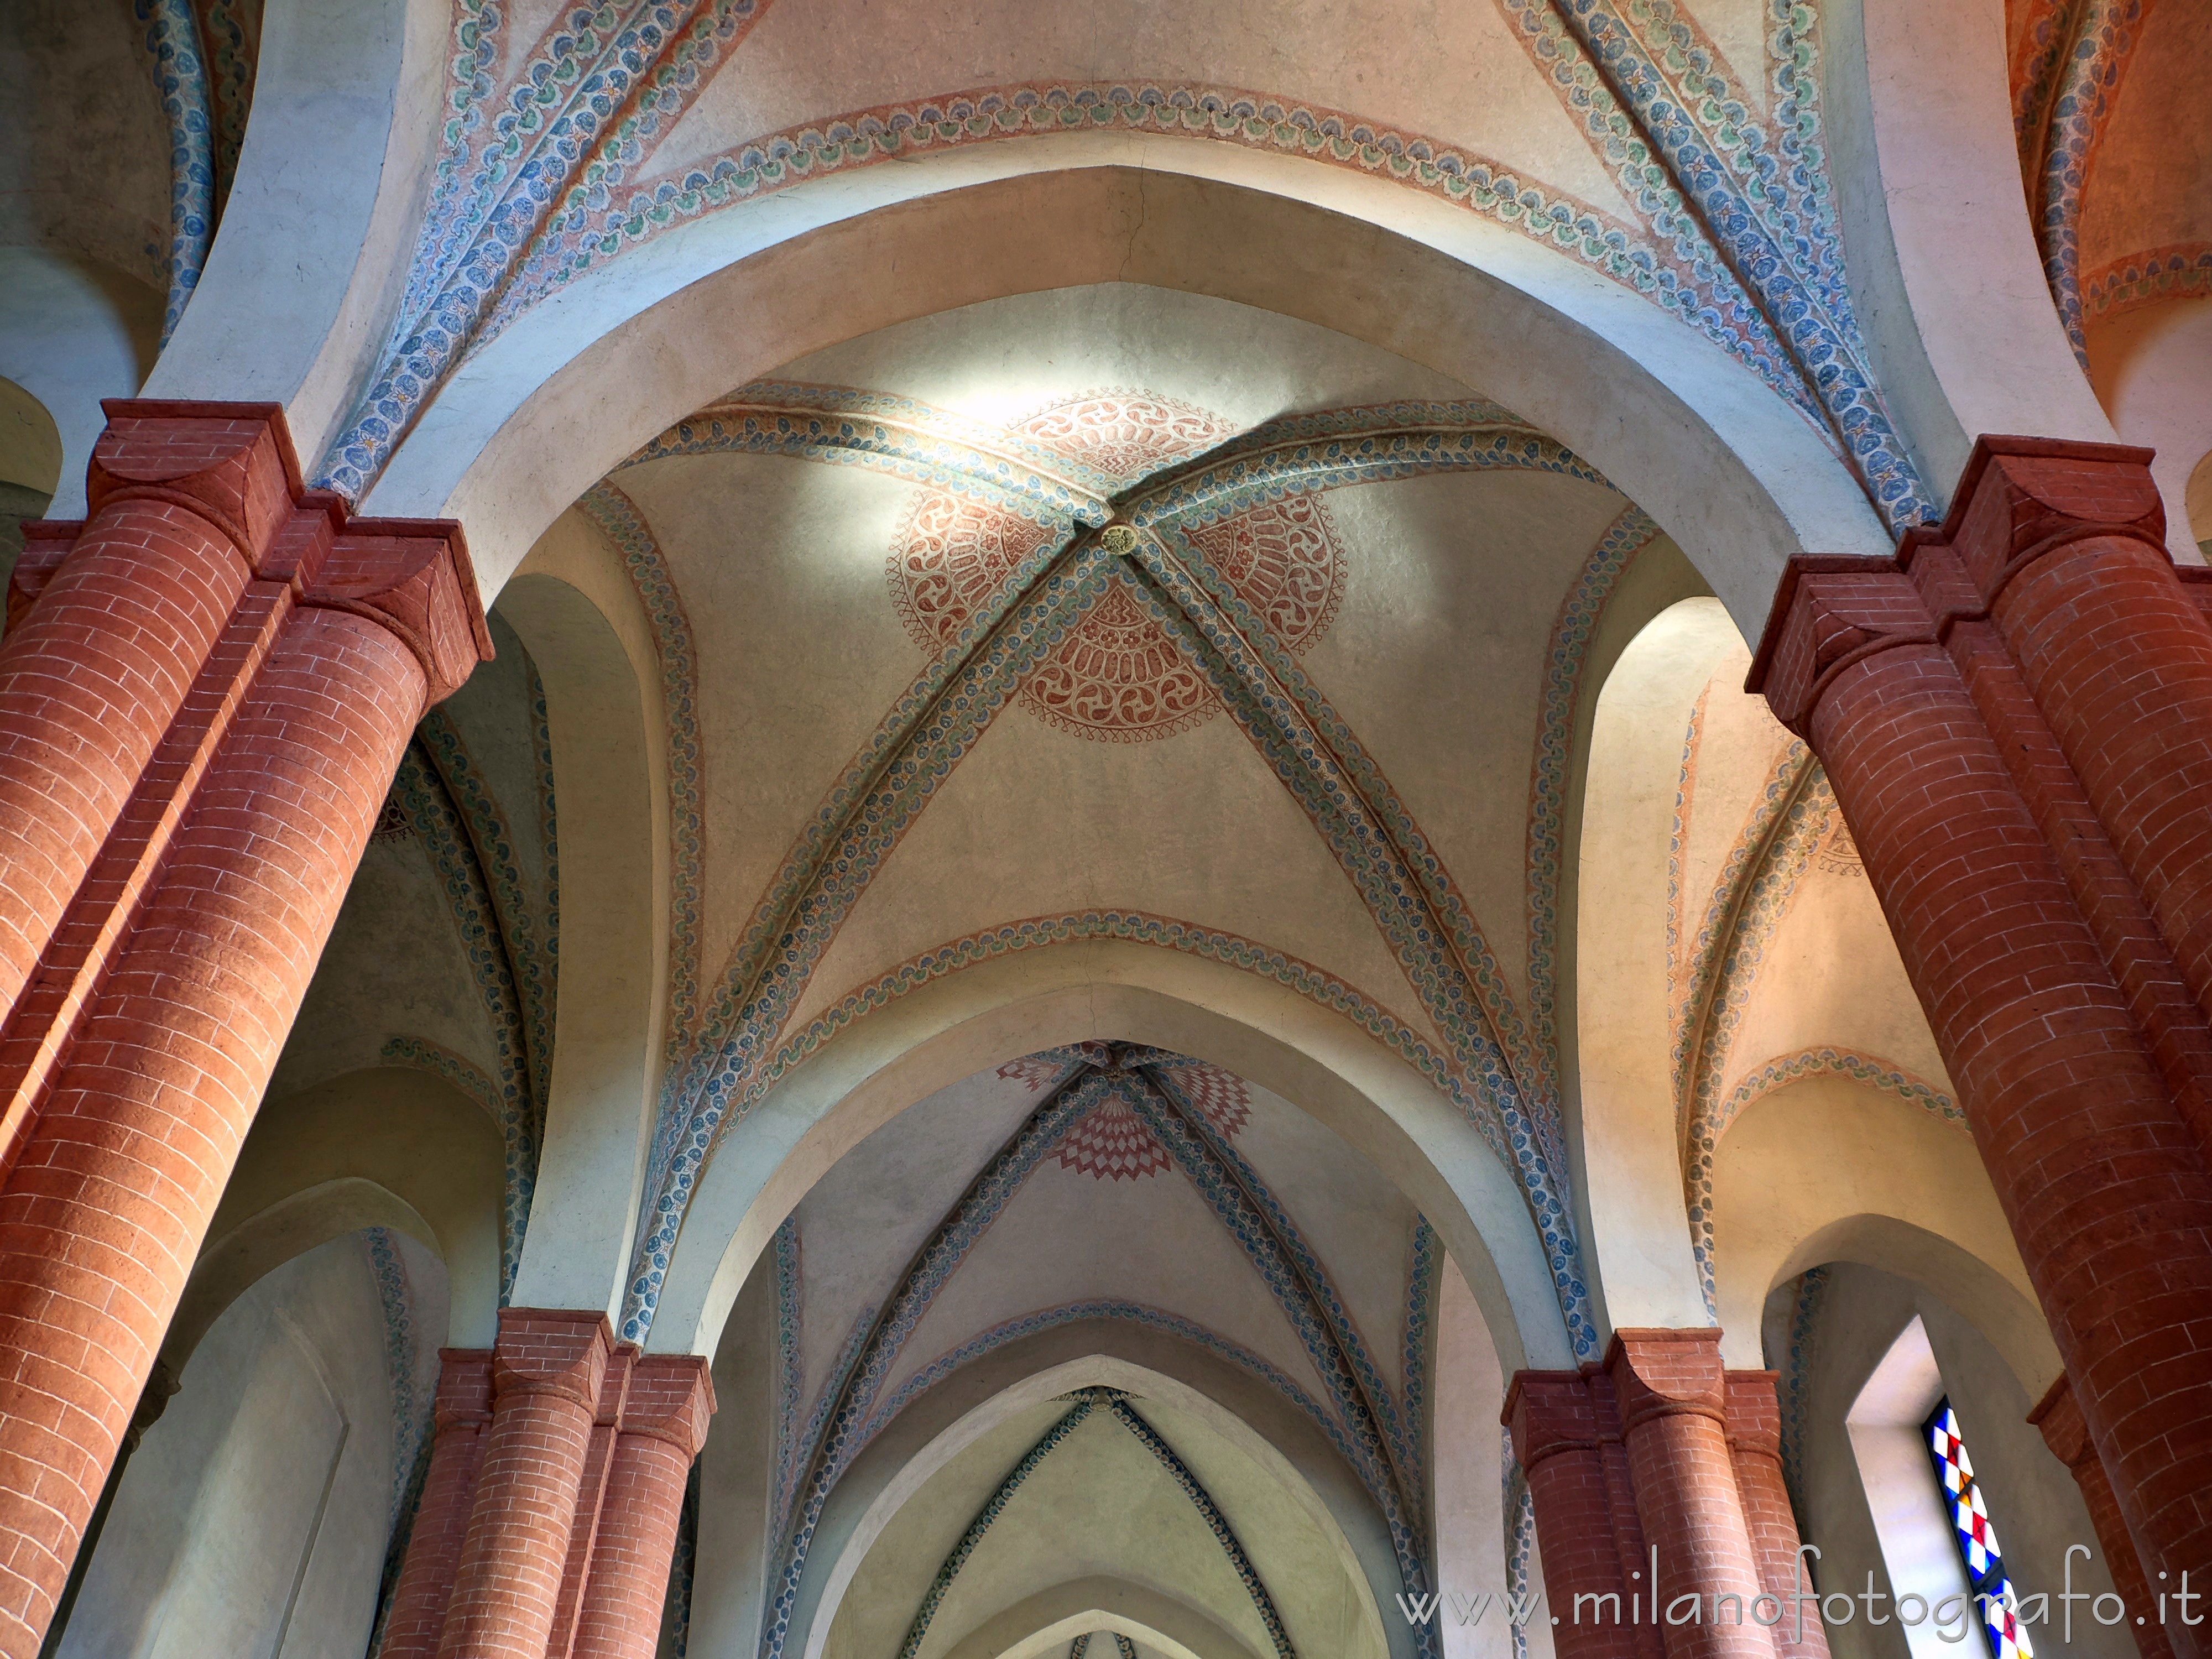 San Nazzaro Sesia (Novara, Italy): Ceiling of the church of the Abbey of the Saints Nazario and Celso - San Nazzaro Sesia (Novara, Italy)